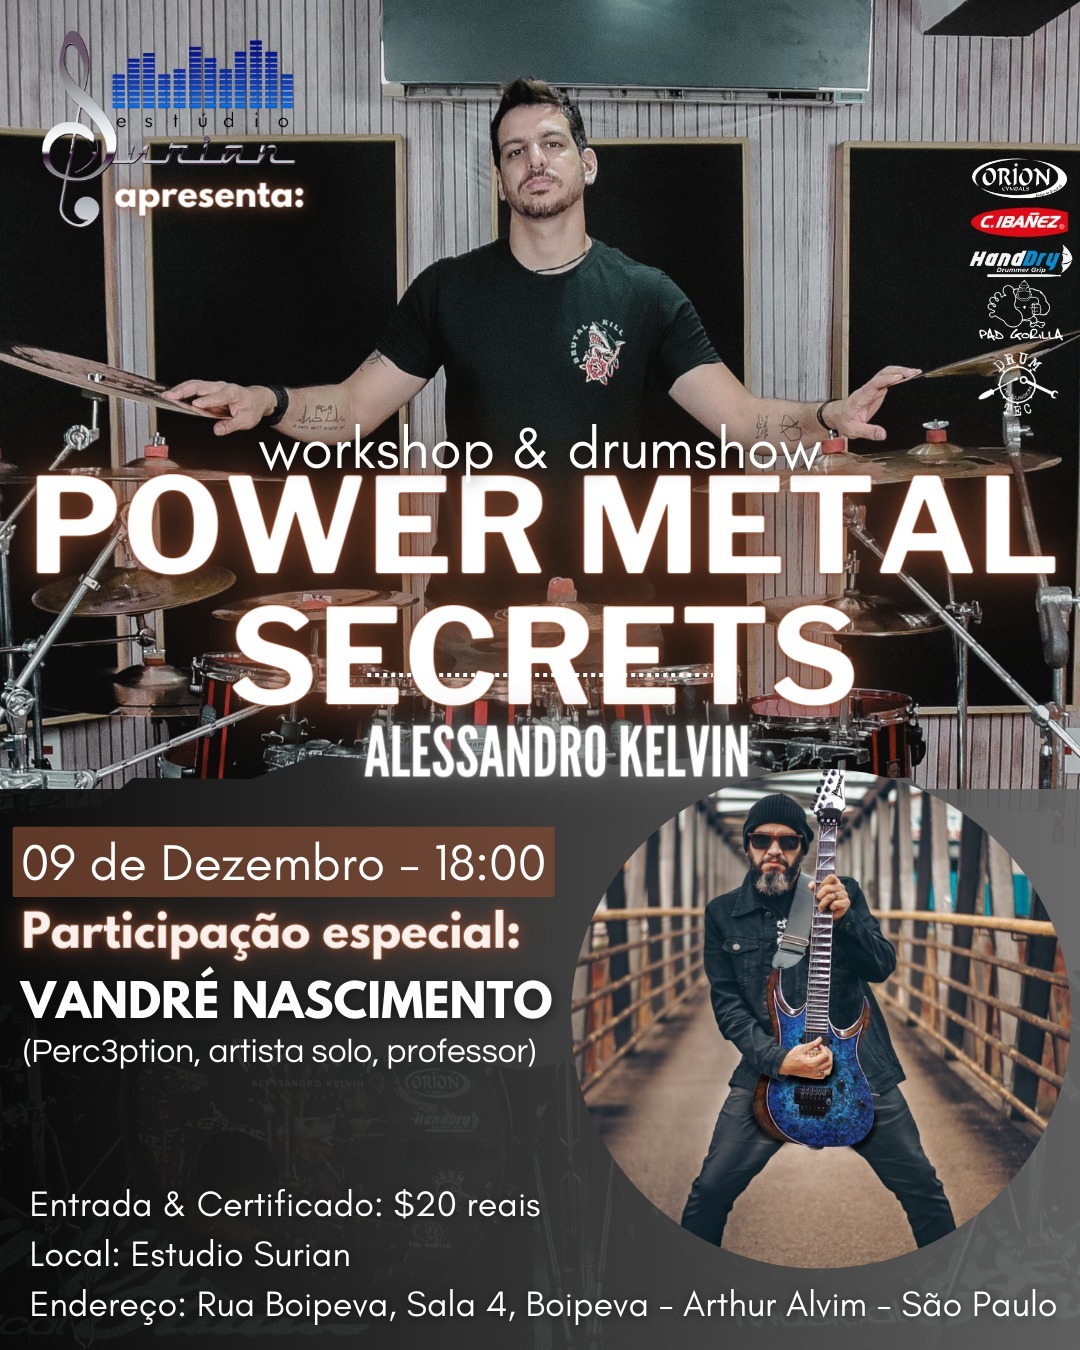 Renomado baterista Alessandro Kelvin promove Workshop e Drumshow “Power Metal Secrets” em São Paulo